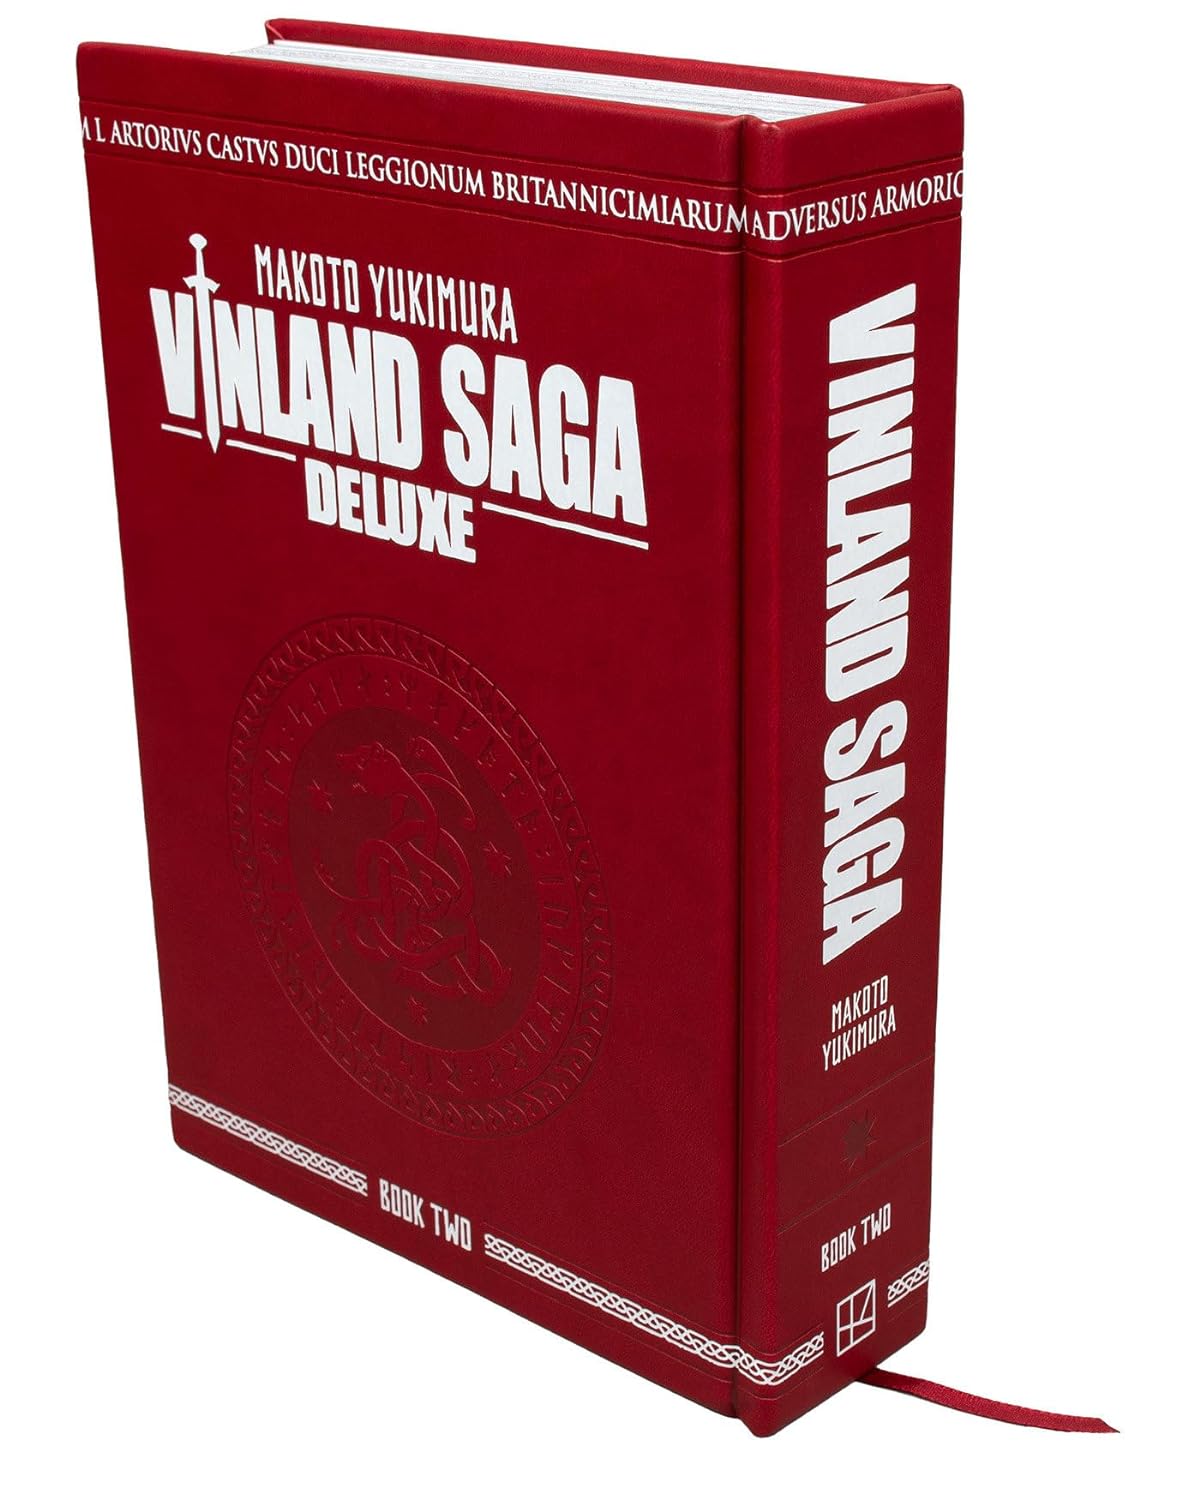 Vinland Saga Deluxe Vol. 02